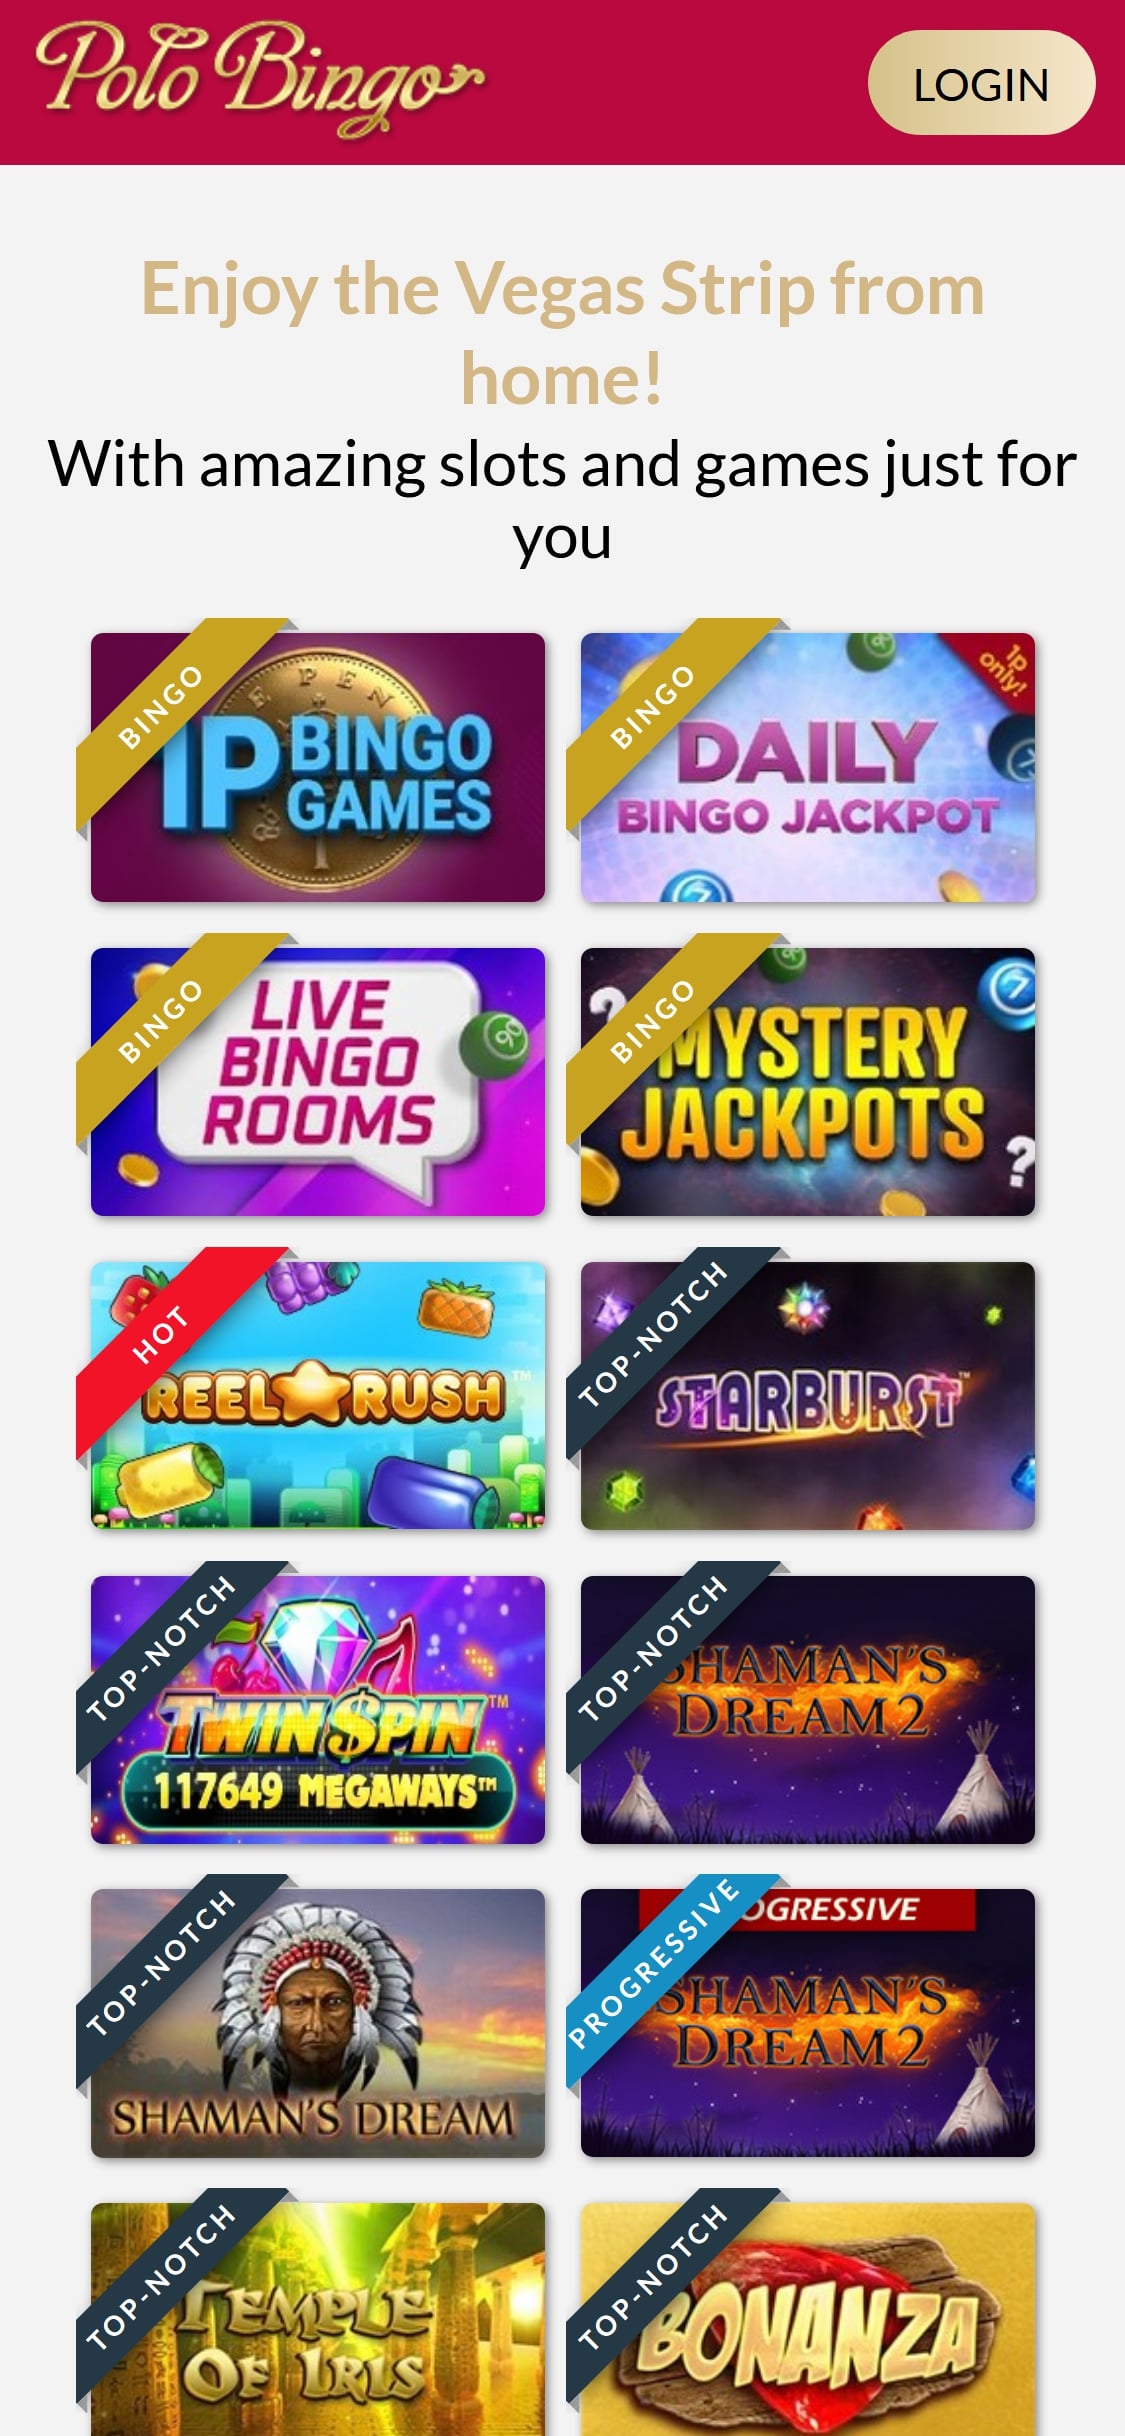 Polo Bingo Casino Mobile Games Review